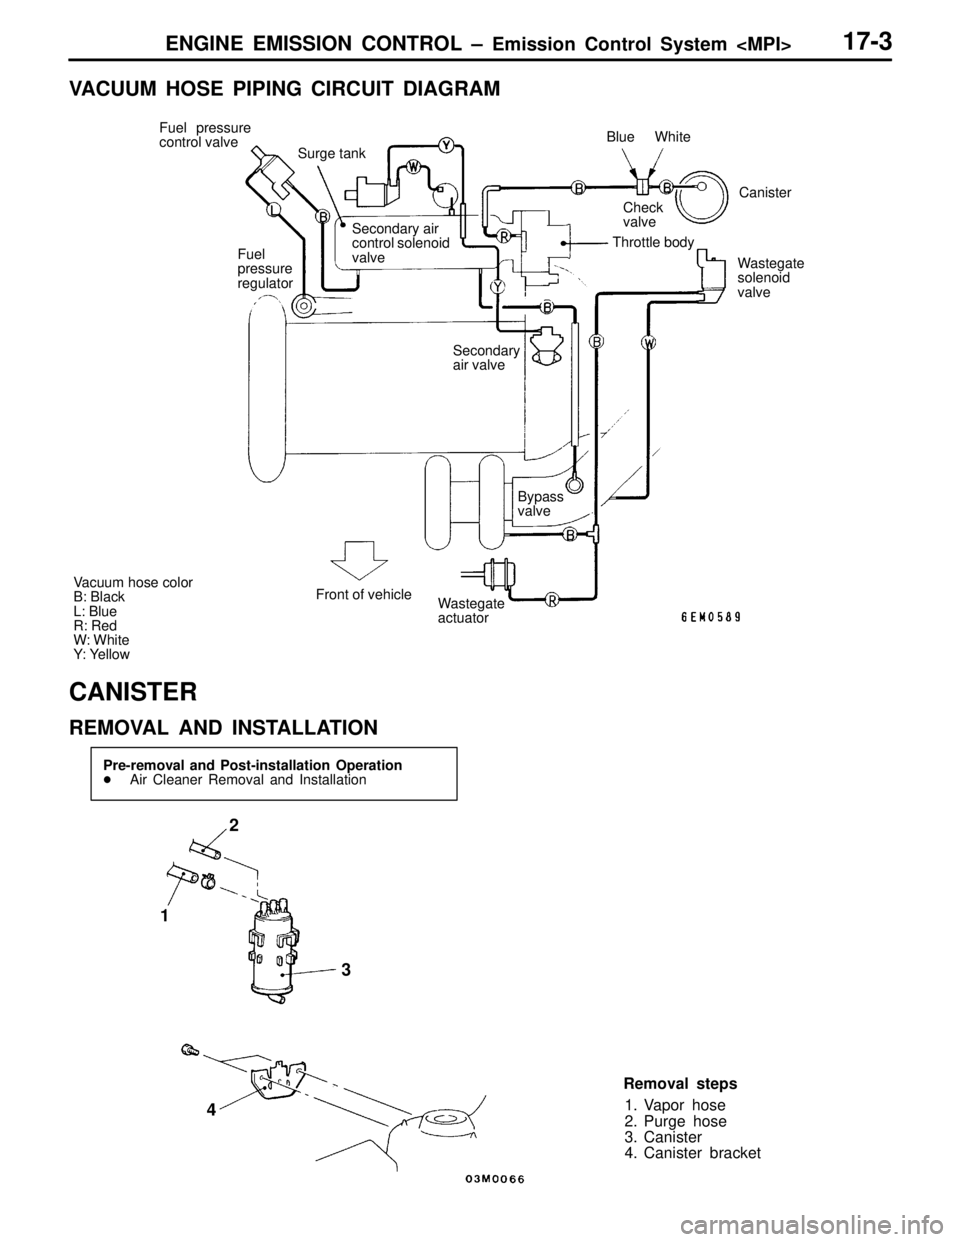 MITSUBISHI LANCER EVOLUTION IV 1998  Workshop Manual ENGINE EMISSION CONTROL – Emission Control System <MPI>17-3
VACUUM HOSE PIPING CIRCUIT DIAGRAM
Fuel pressure
control valve
Surge tank
Secondary air 
control solenoid
valveBlue White
Canister
Check
v